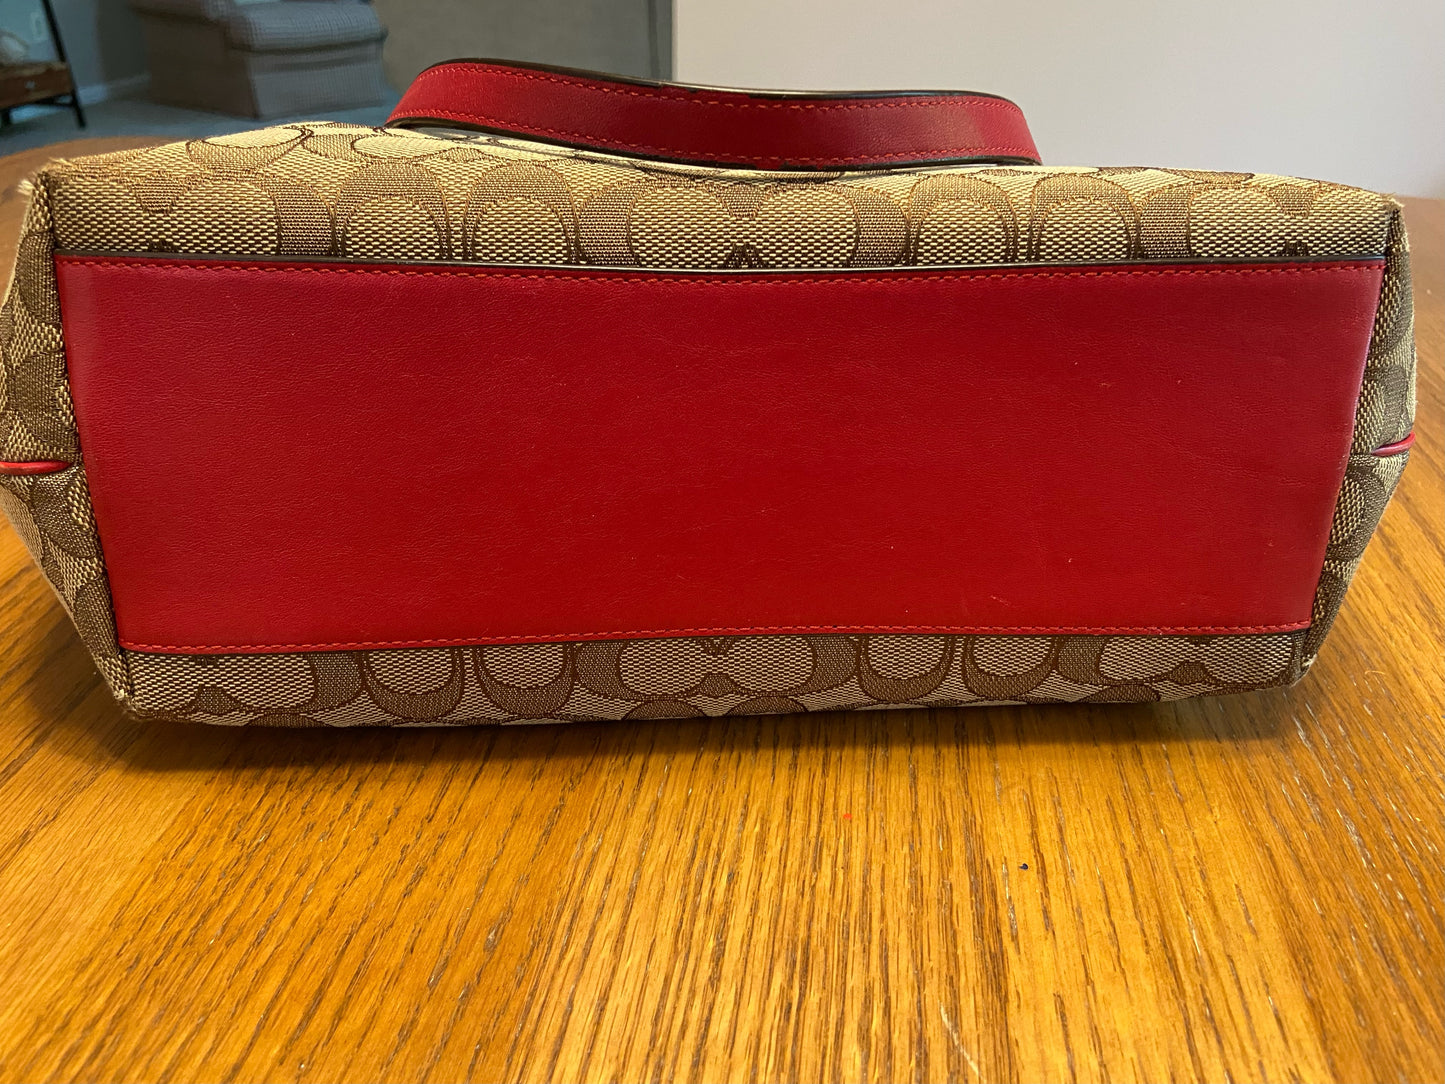 Coach Signature Shoulder Bag - Jacquard Canvas, Brown & Red, 45242/45140